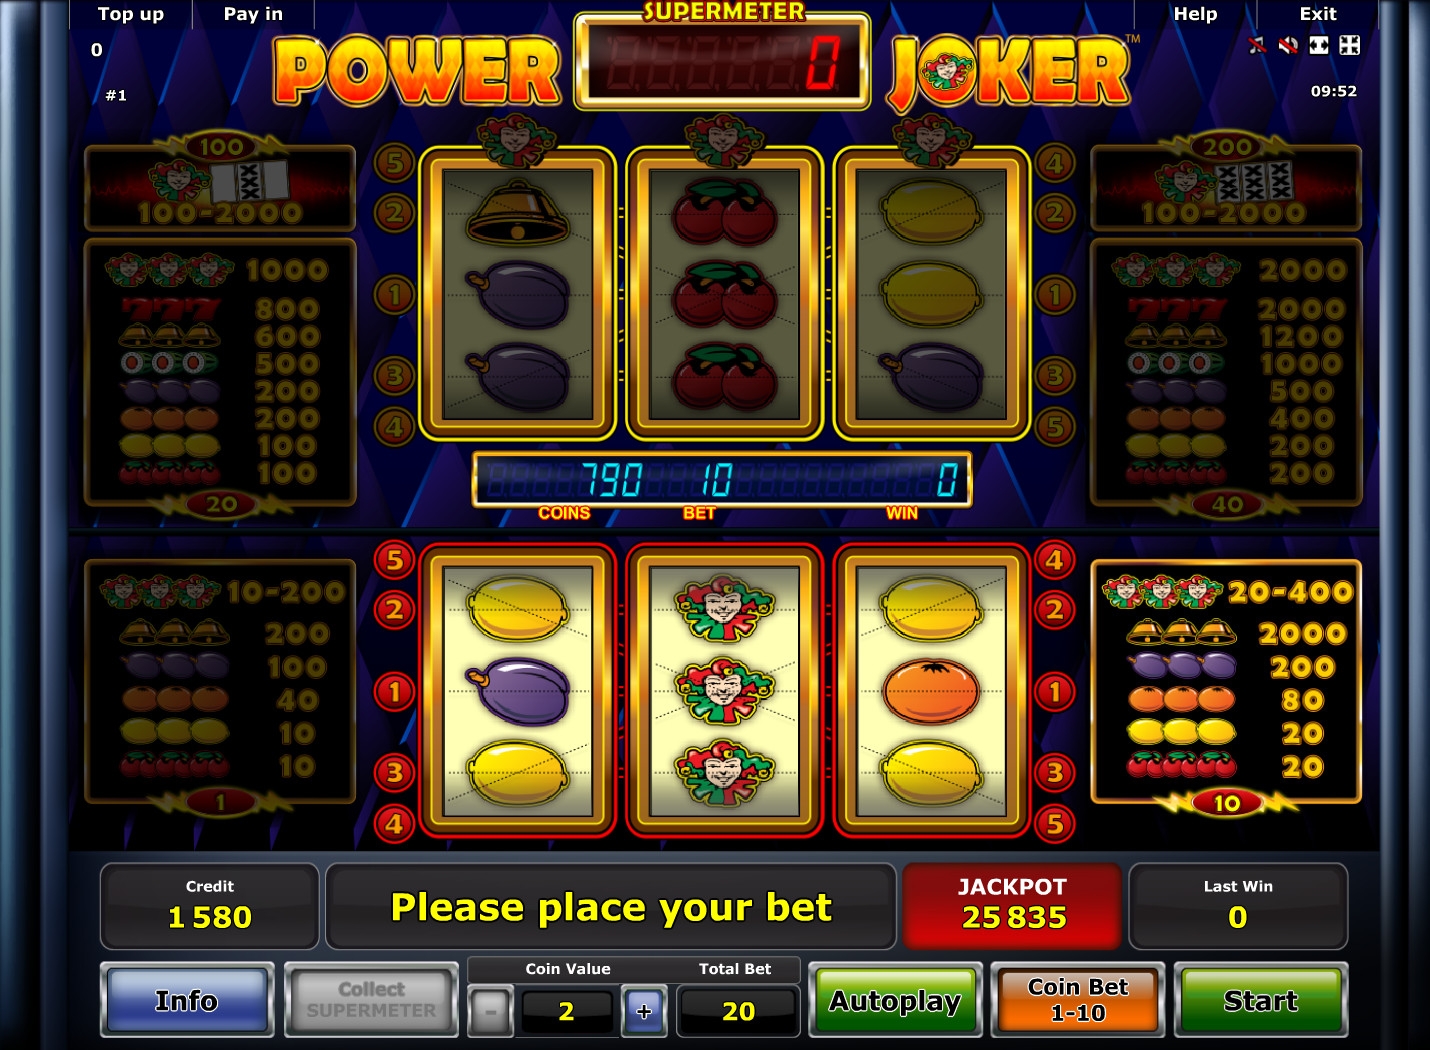 Power Joker (Power Joker) from category Slots